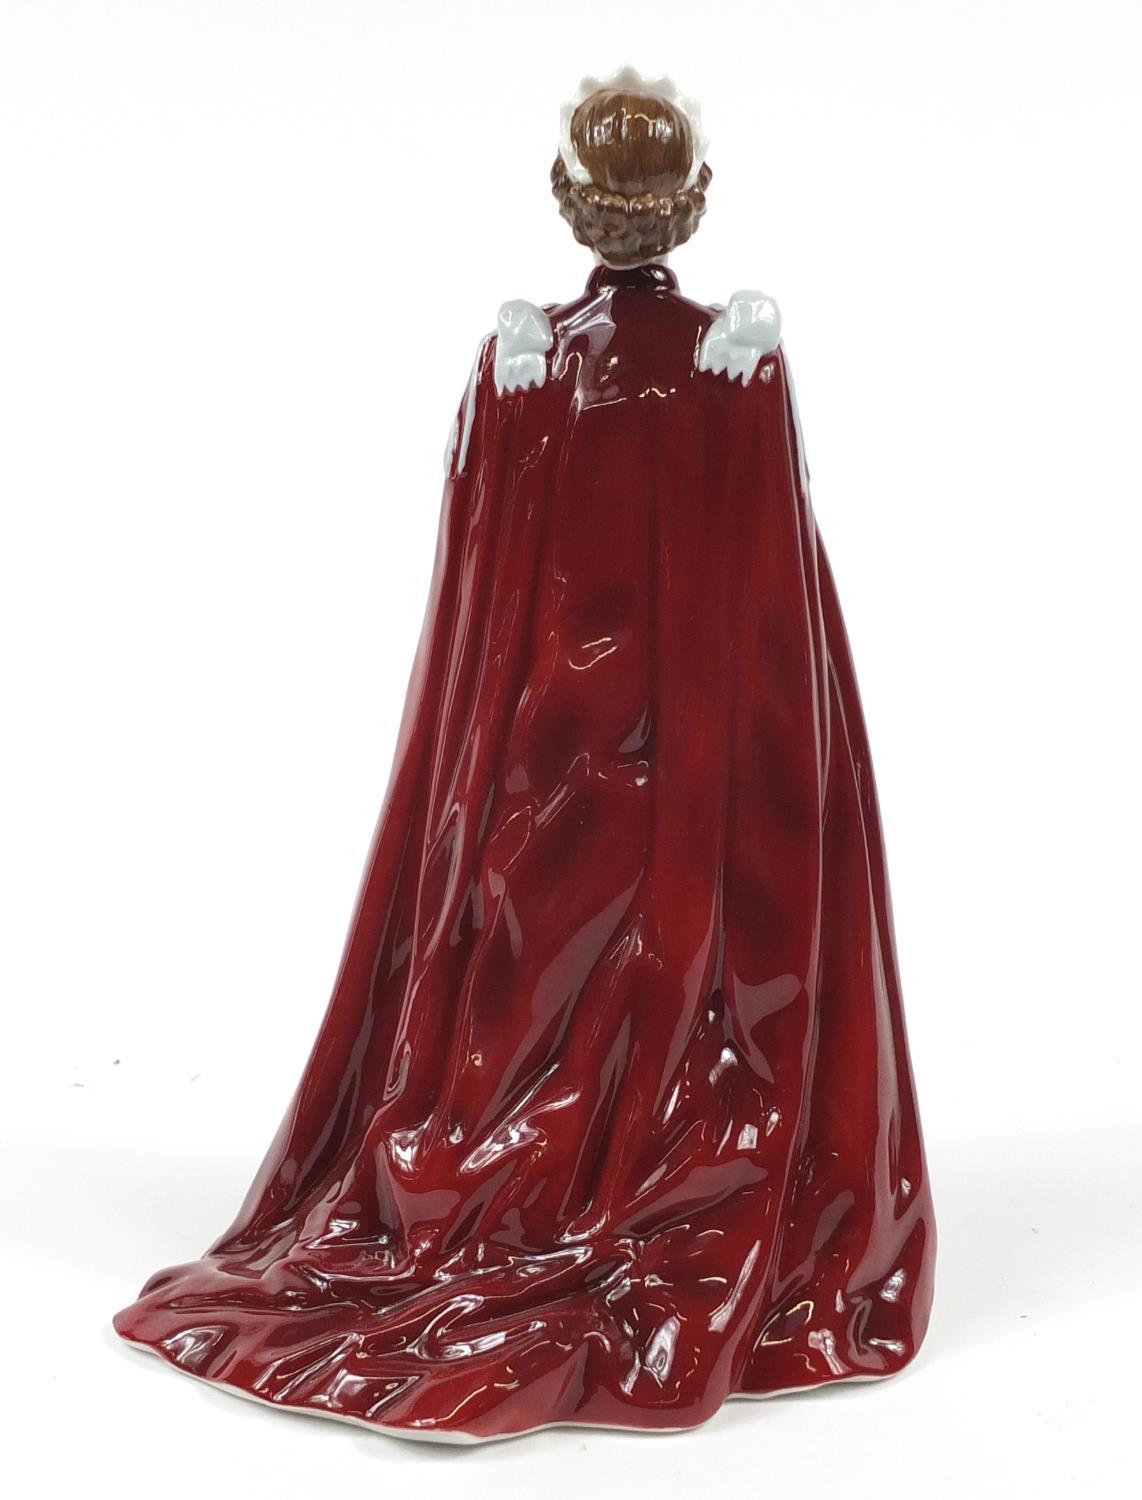 Royal Worcester figurine of Queen Elizabeth II, 23cm high - Image 4 of 8